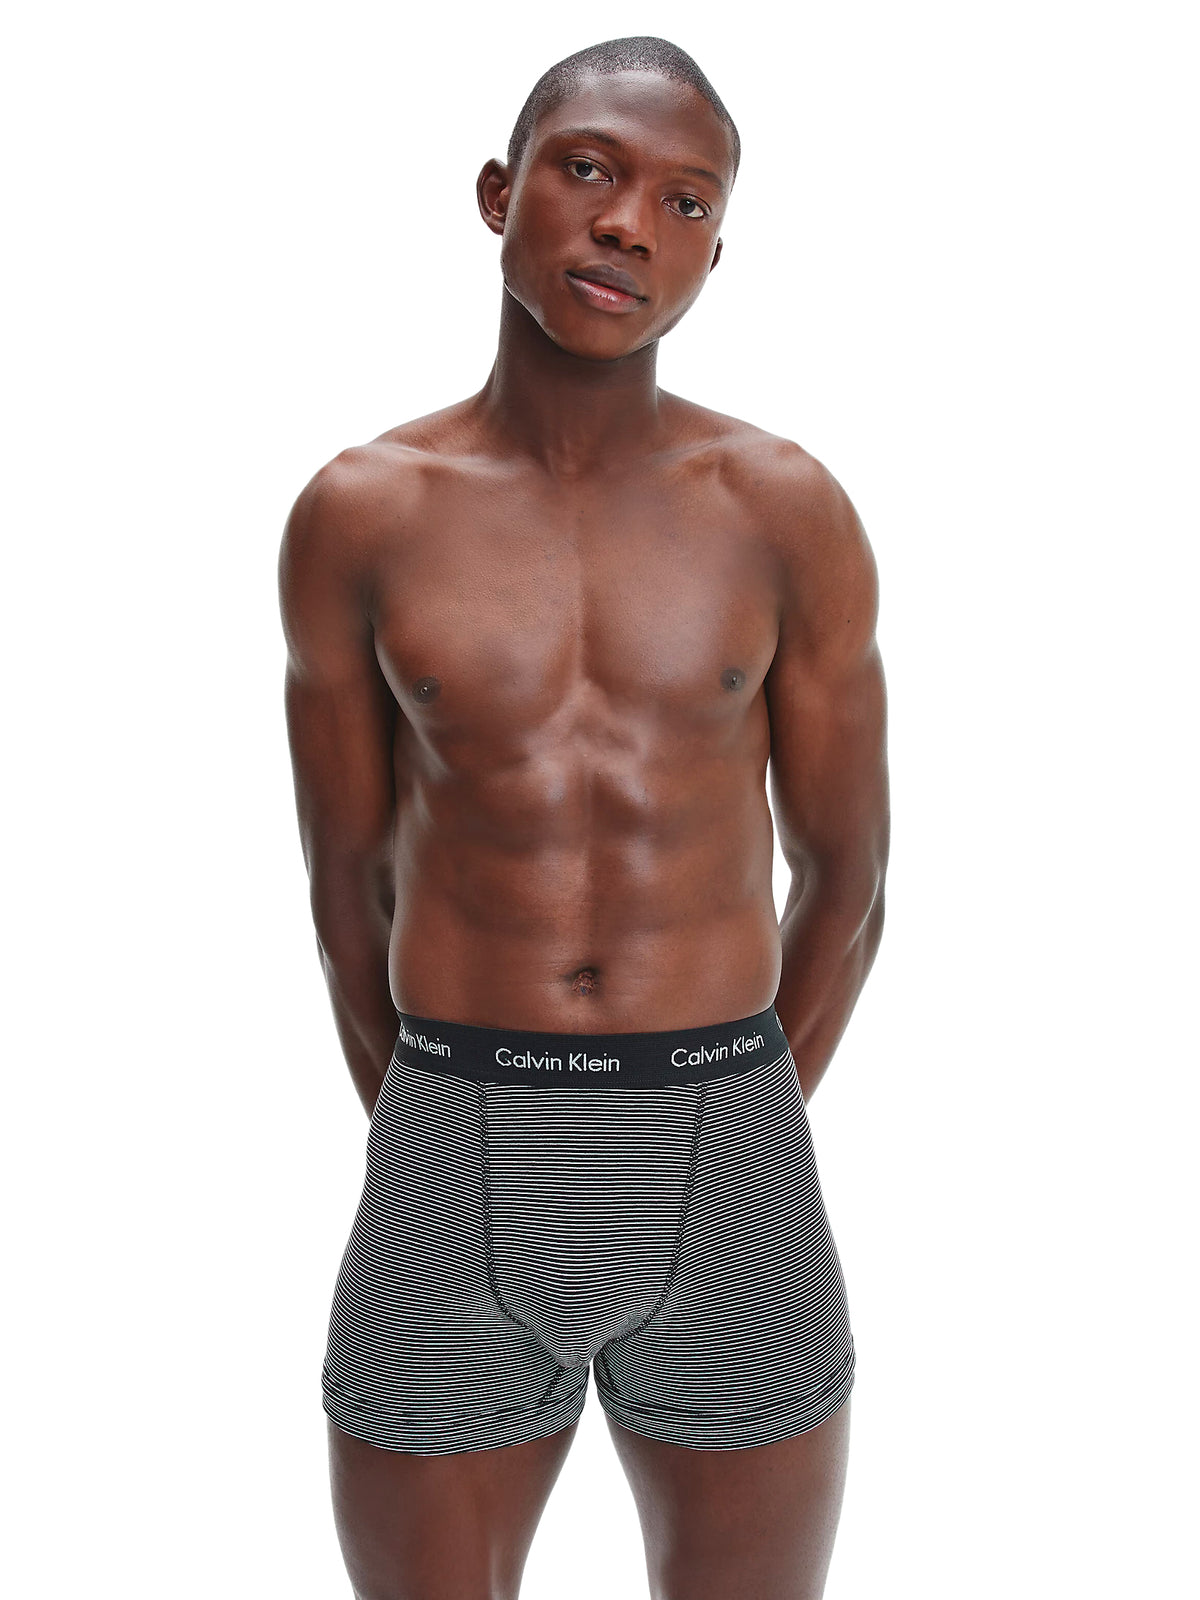 Calvin Klein Stretch Boxer Shorts/ Trunks (3-Pack) - White/ B&W Stripe/ Black, 08, U2662G_IOT, White/ B&W Stripe/ Black